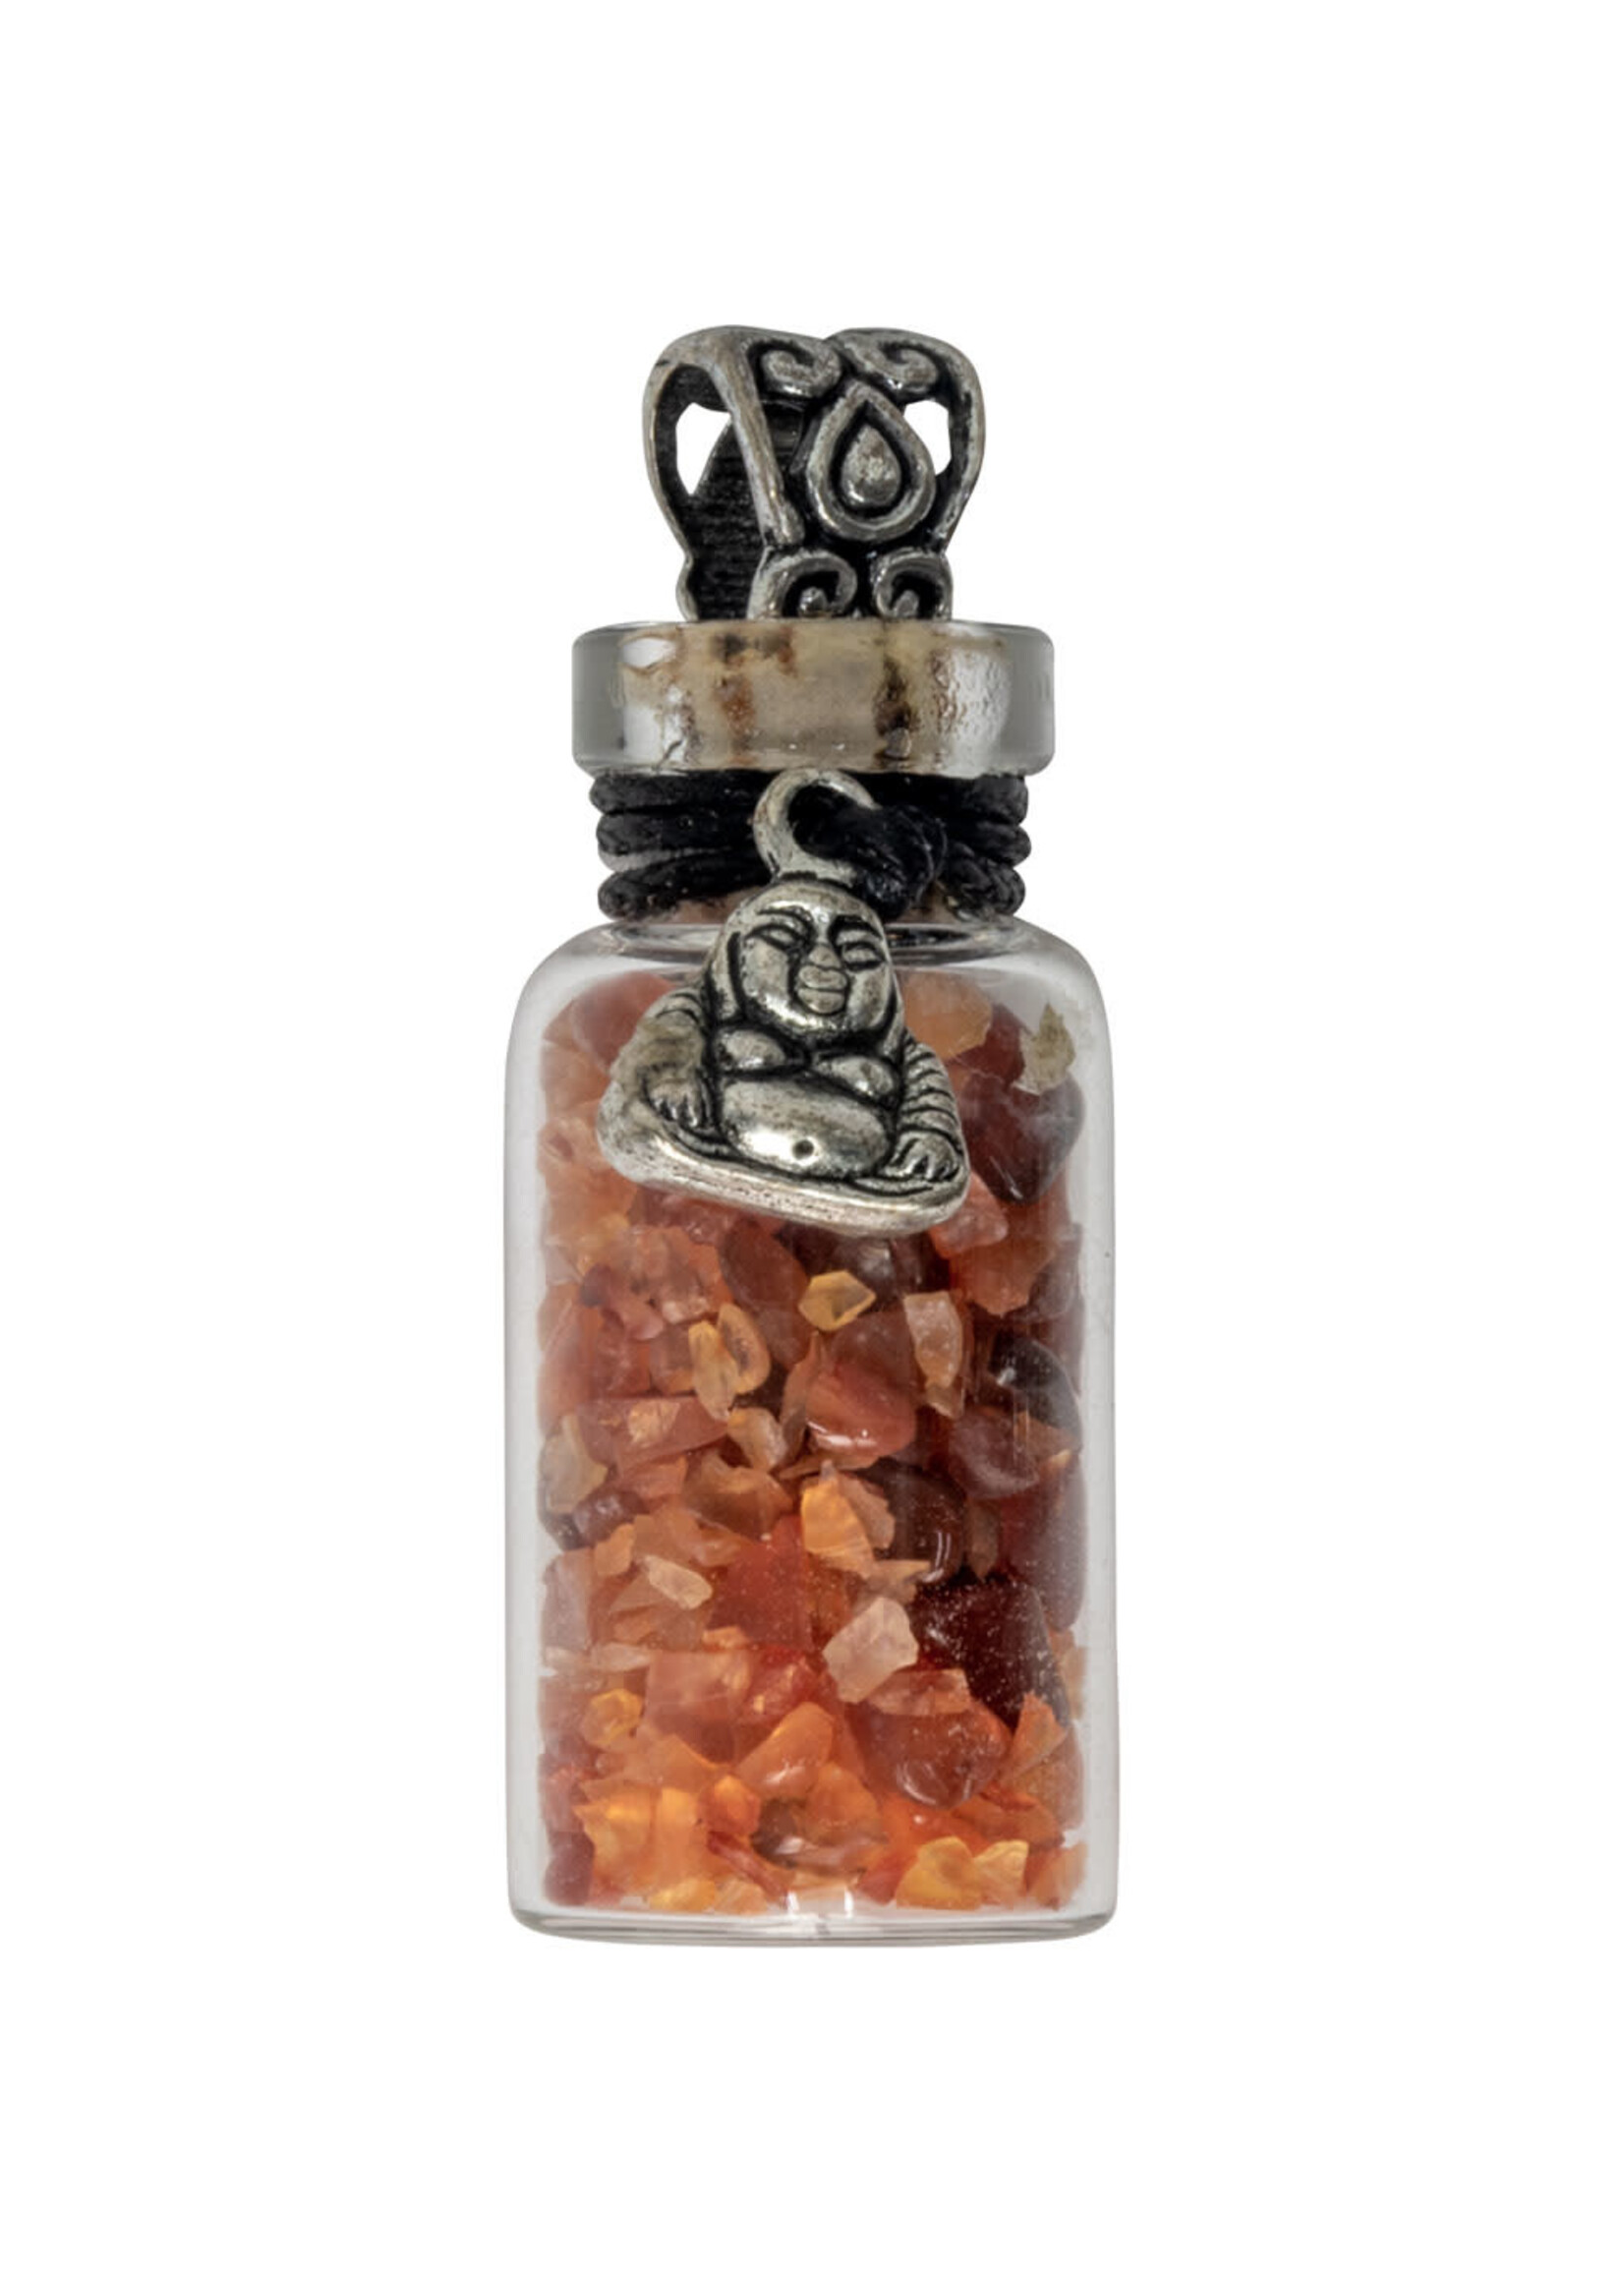 Gemstone Chip Bottle Necklace - Carnelian with Happy Buddha